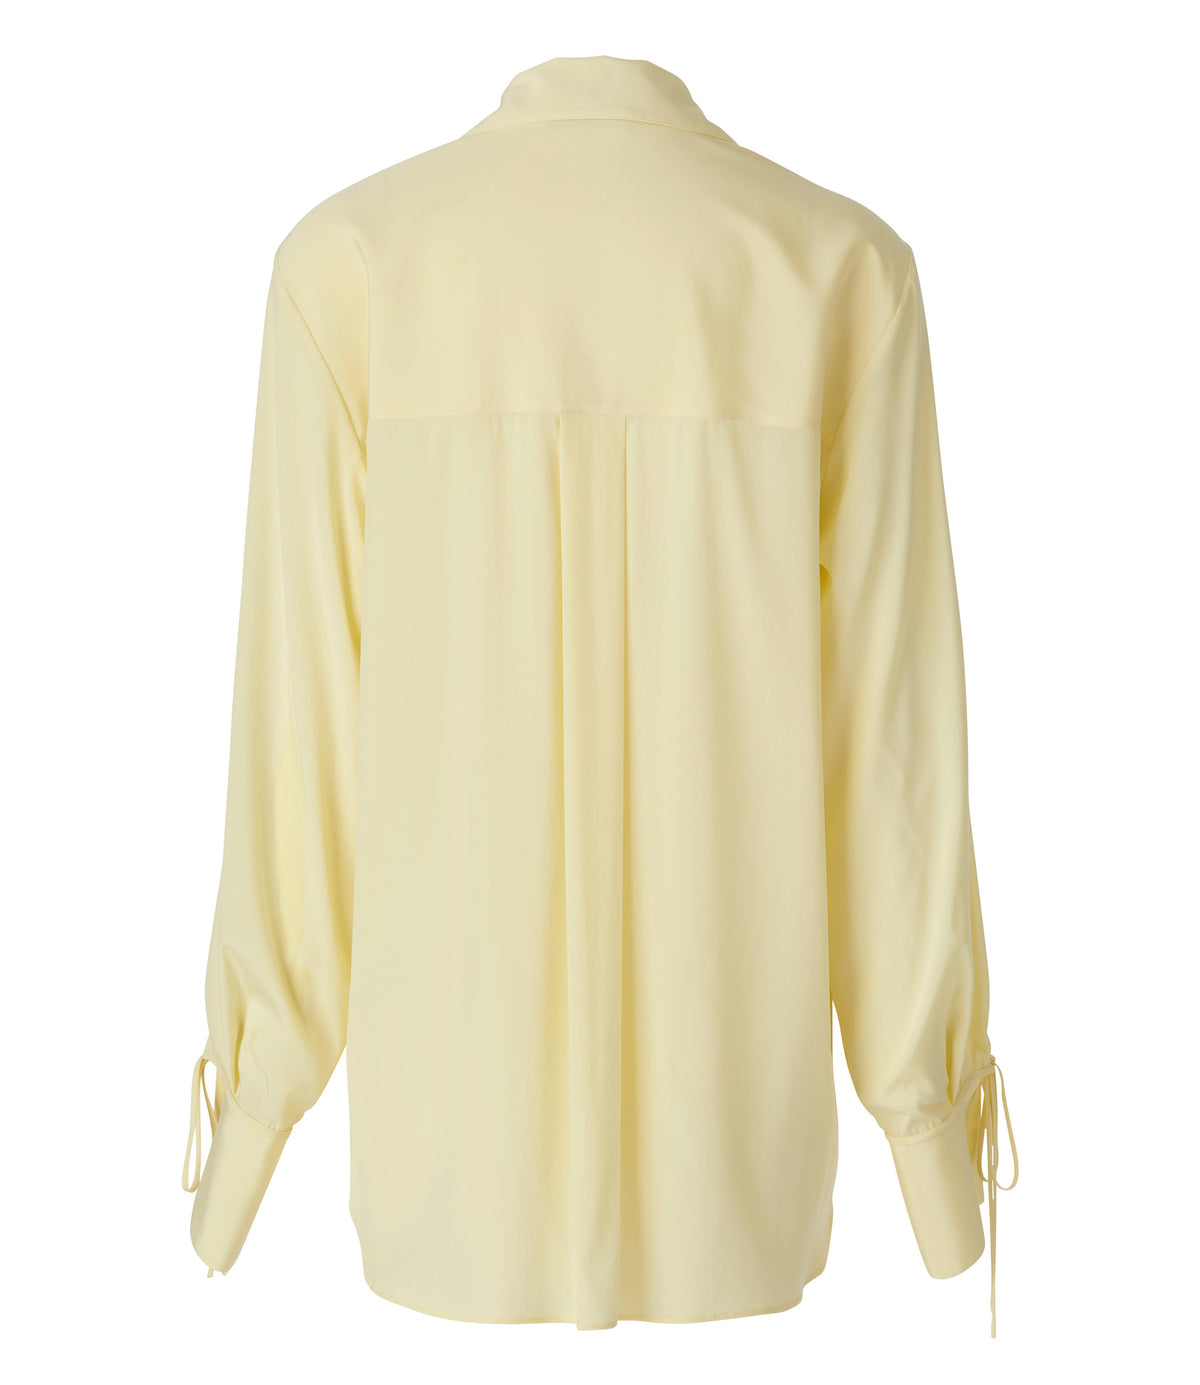 Jean Maroe - Bluse aus Seide gelb